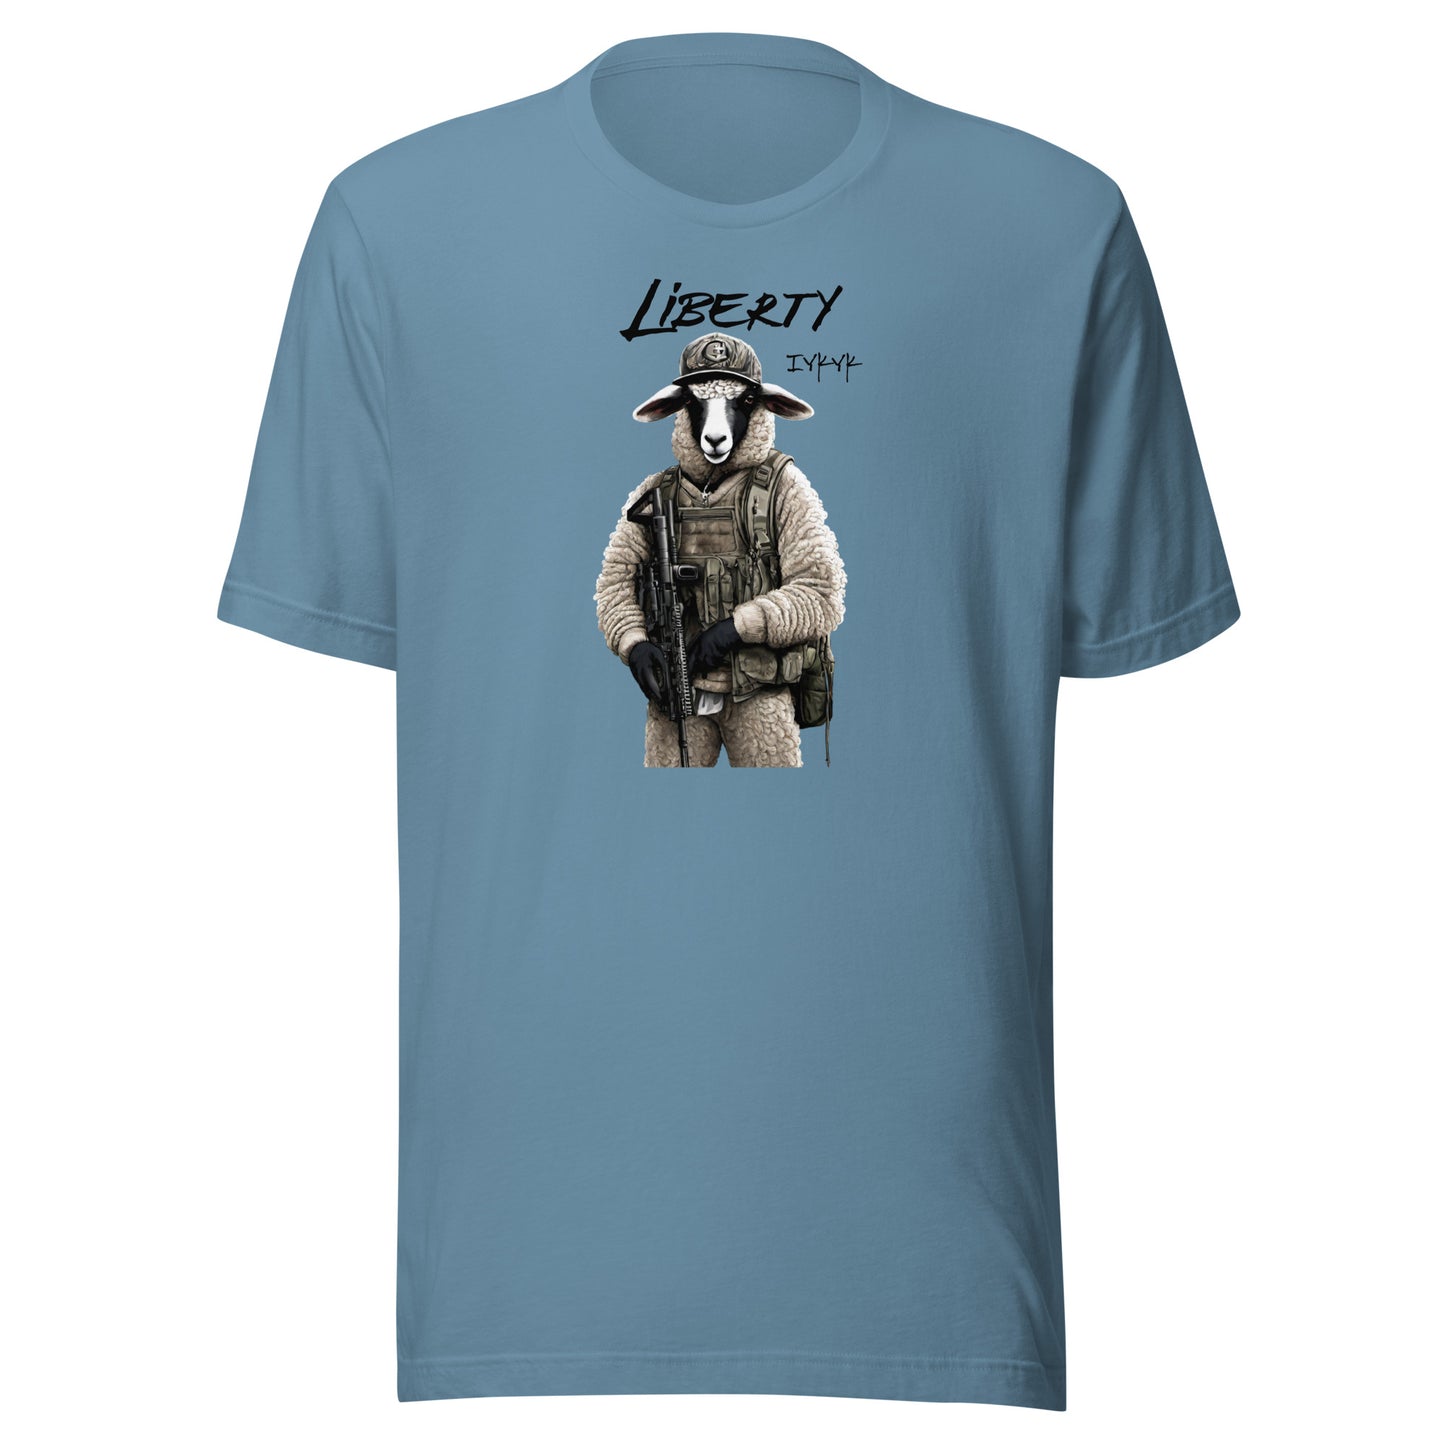 Liberty Lamb 2nd Amendment Graphic T-Shirt Steel Blue